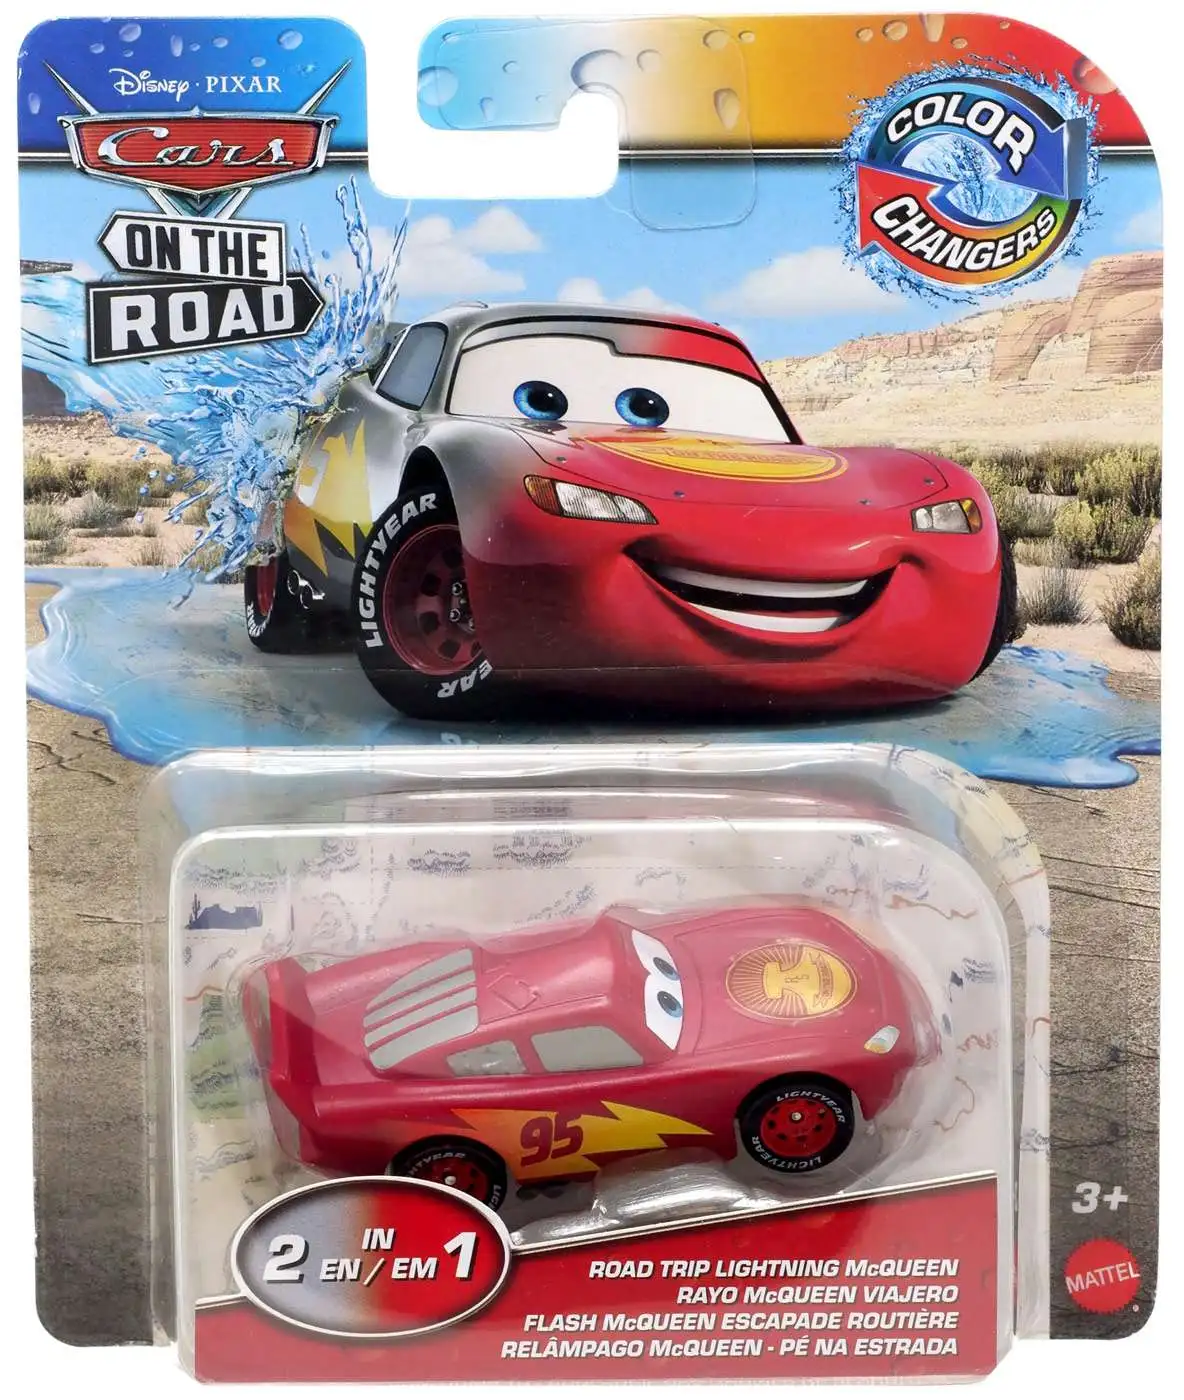 Pixar Cars Color Changers - Road trip Lightning McQueen Road trip Lightning McQueen - Leiker